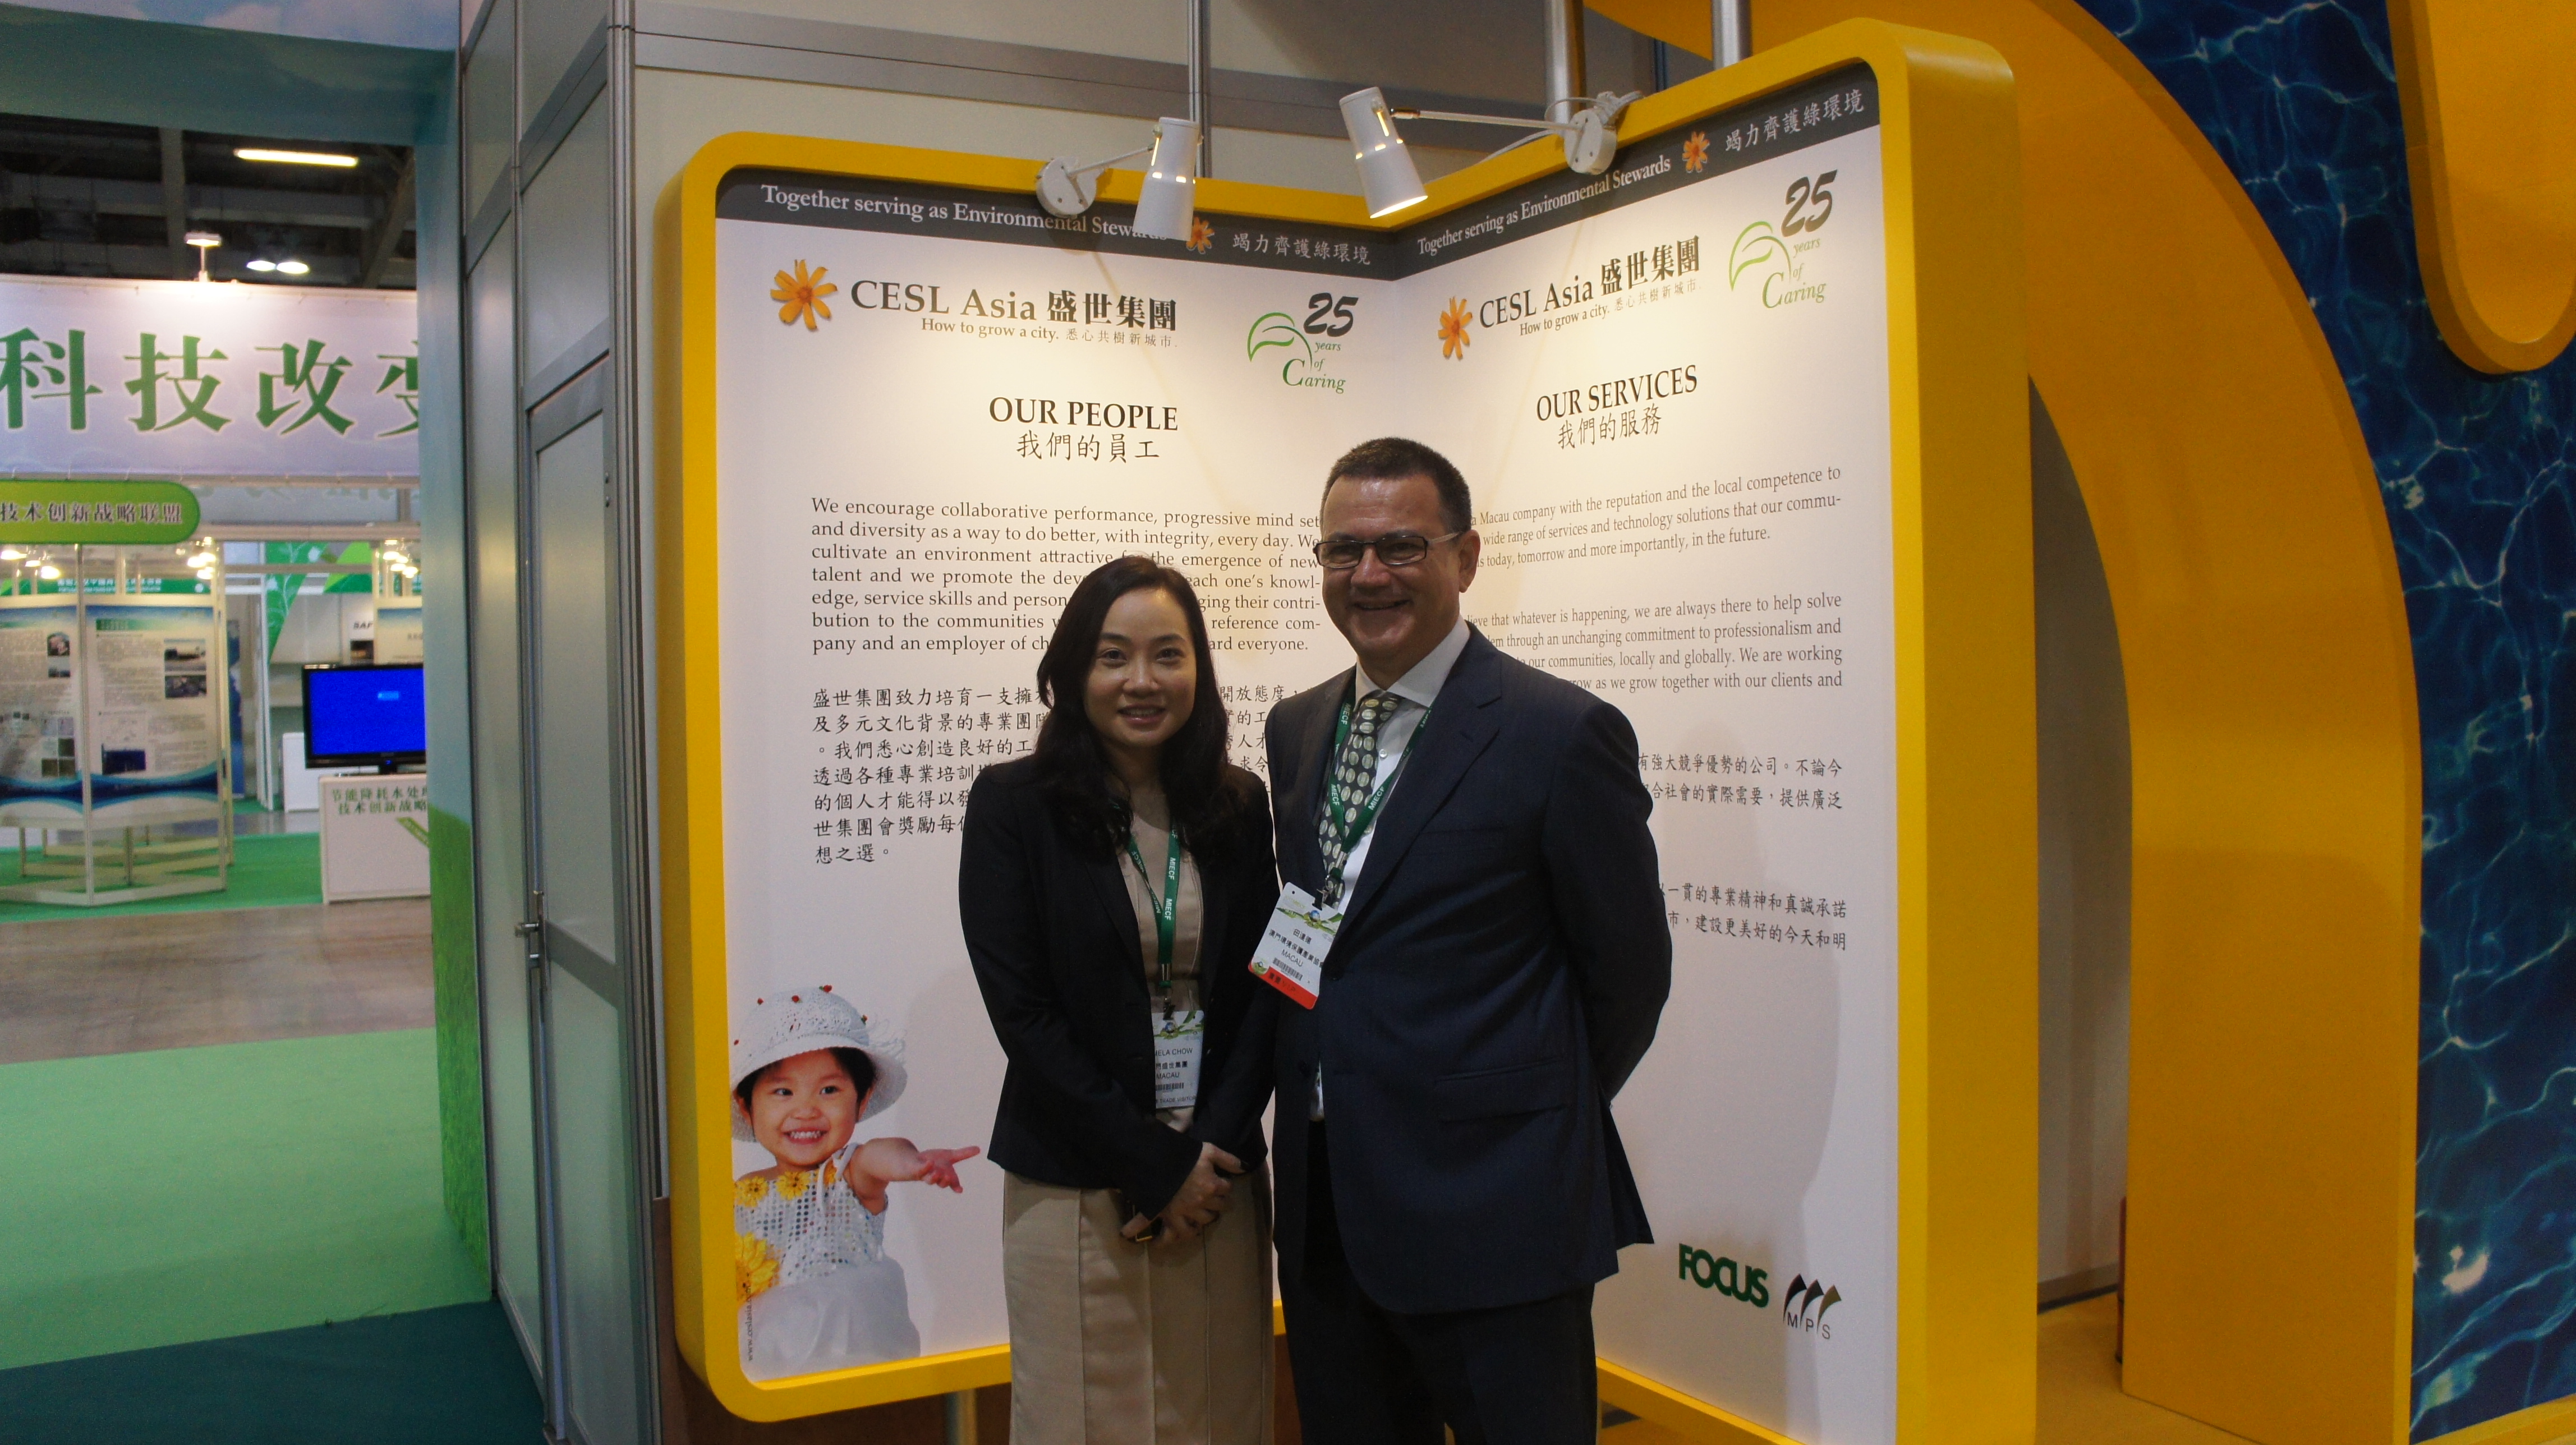 CESL Asia participates in MIECF 2013